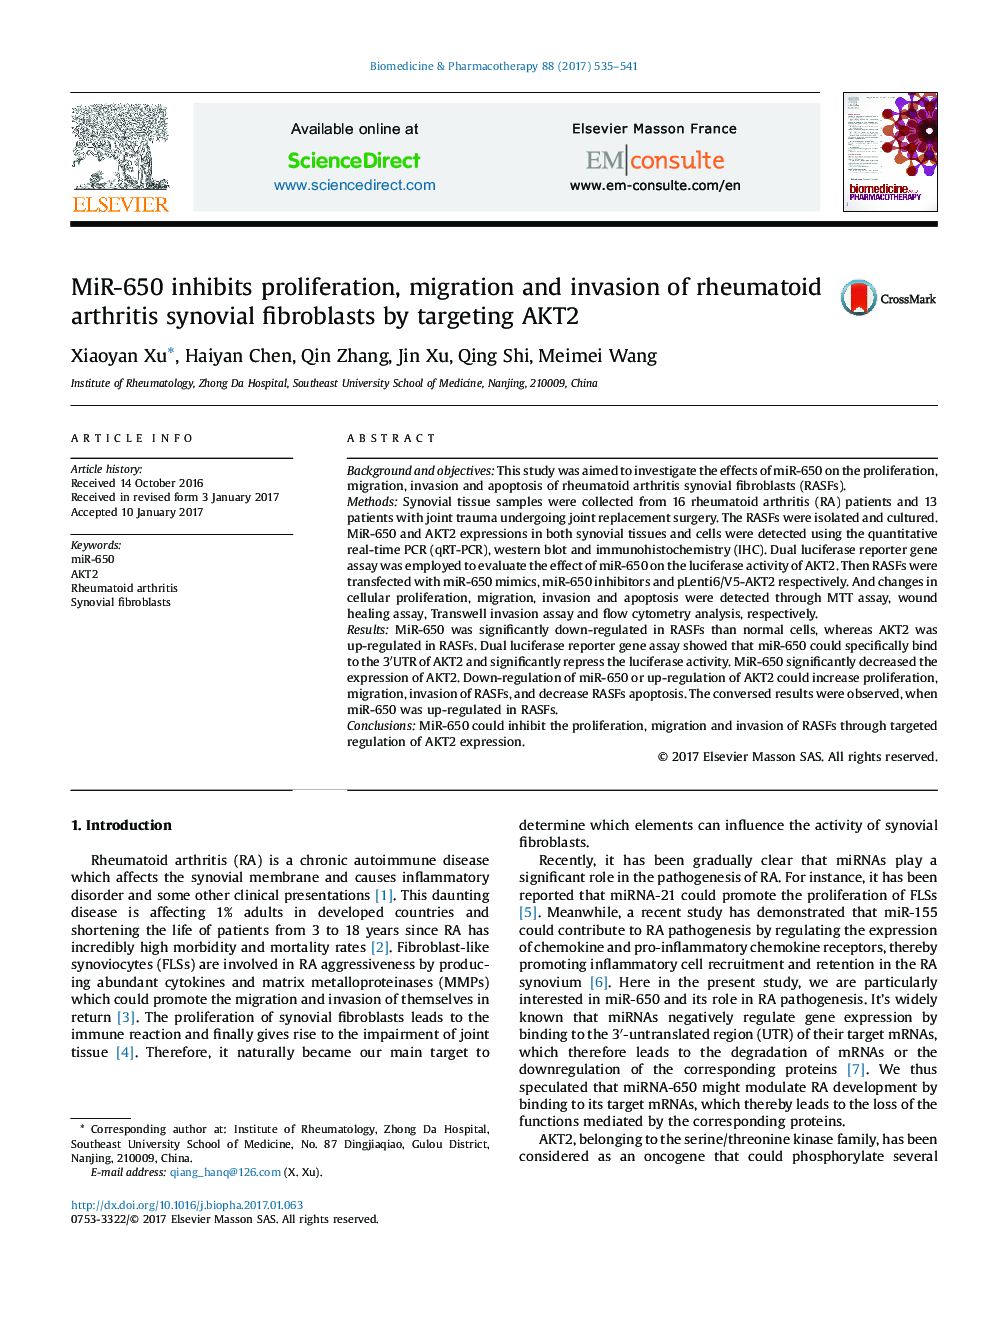 MiR-650 inhibits proliferation, migration and invasion of rheumatoid arthritis synovial fibroblasts by targeting AKT2